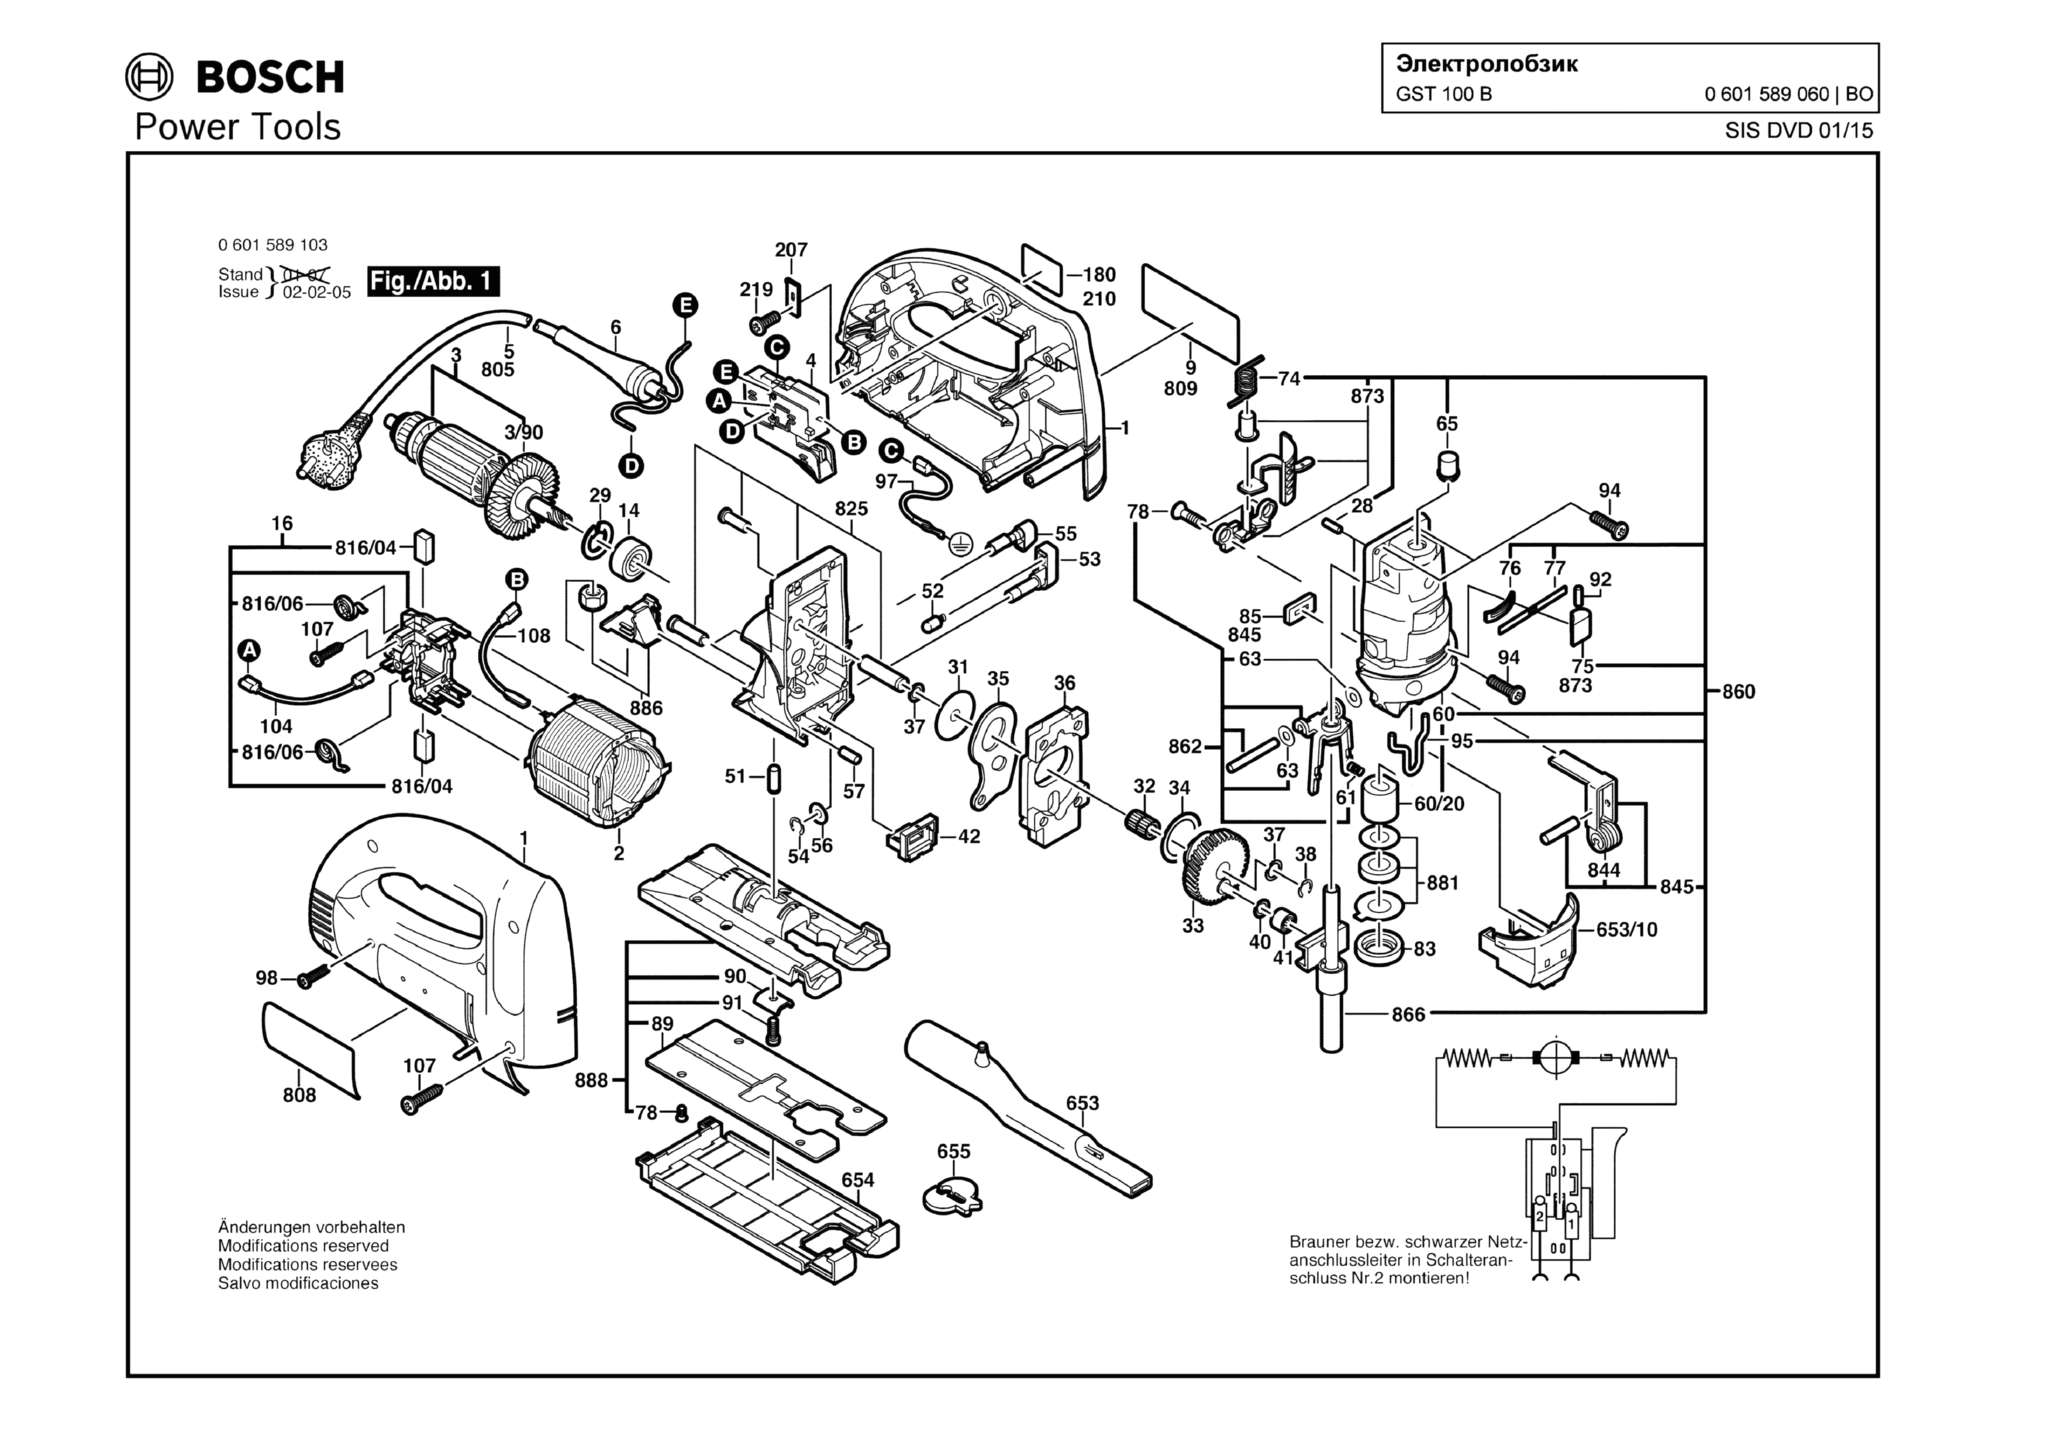 Запчасти, схема и деталировка Bosch GST 100 B (ТИП 0601589060)